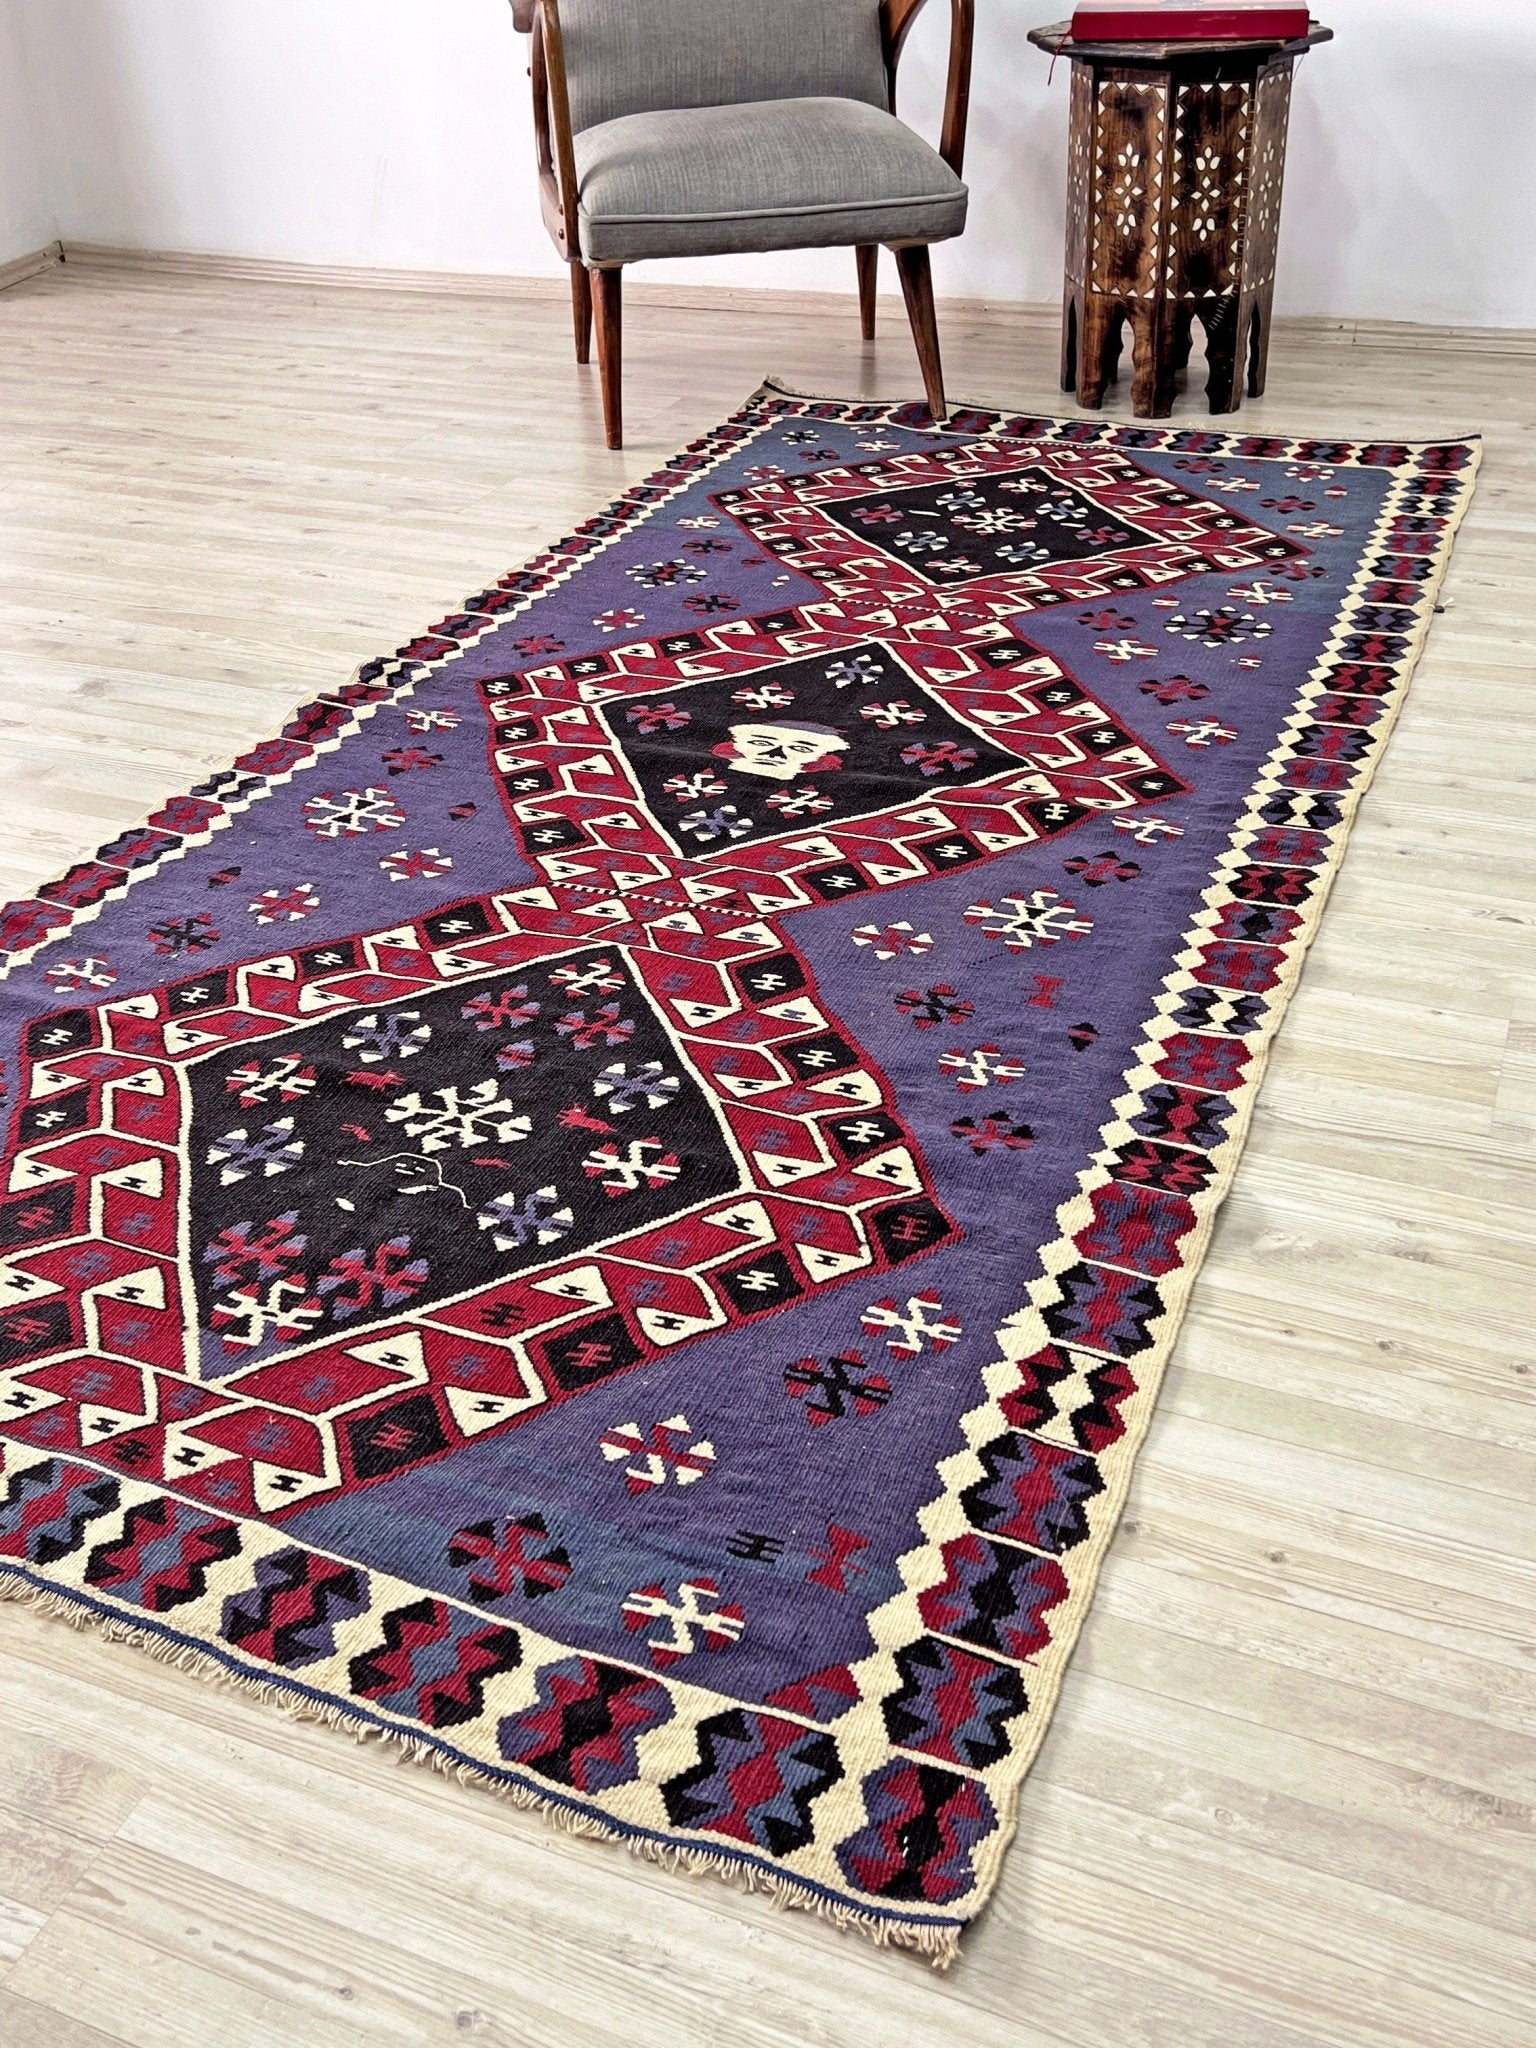 anatolian kilim turkish rug shopping rug store san francisco bay area shop buy online palo alto berkeley buy vintage rug